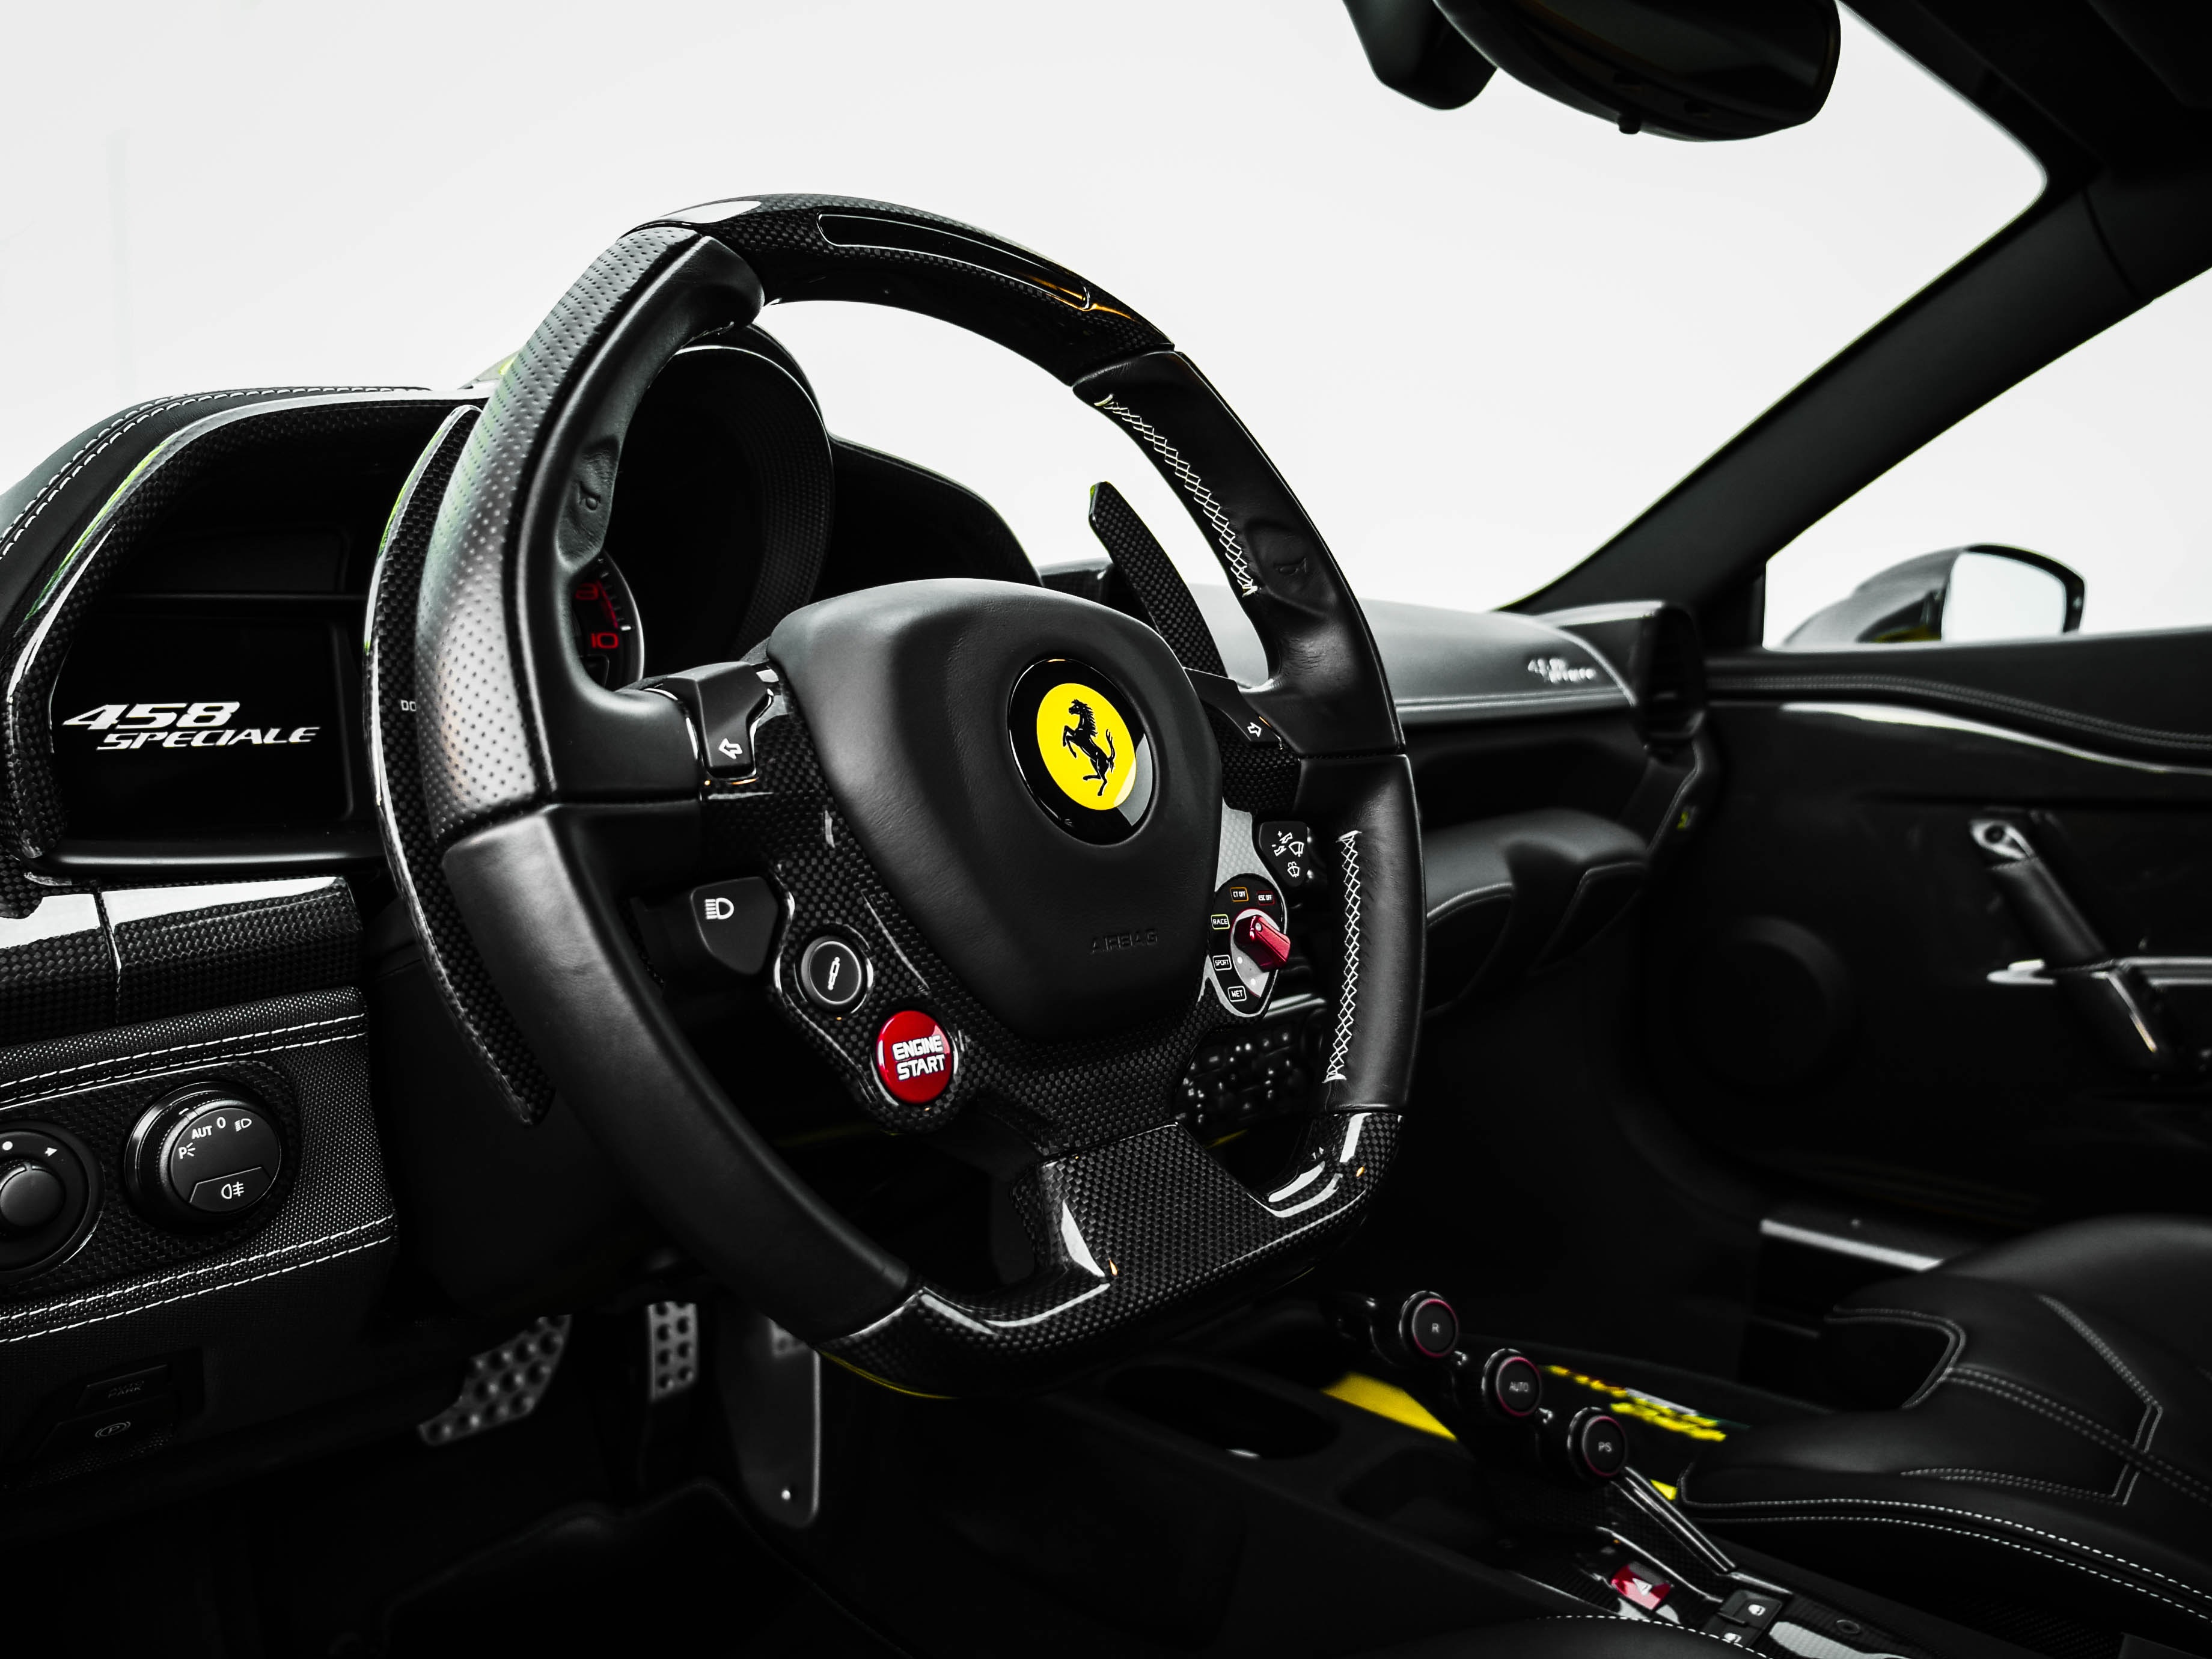 Ferrari Sports Cars Wallpapers